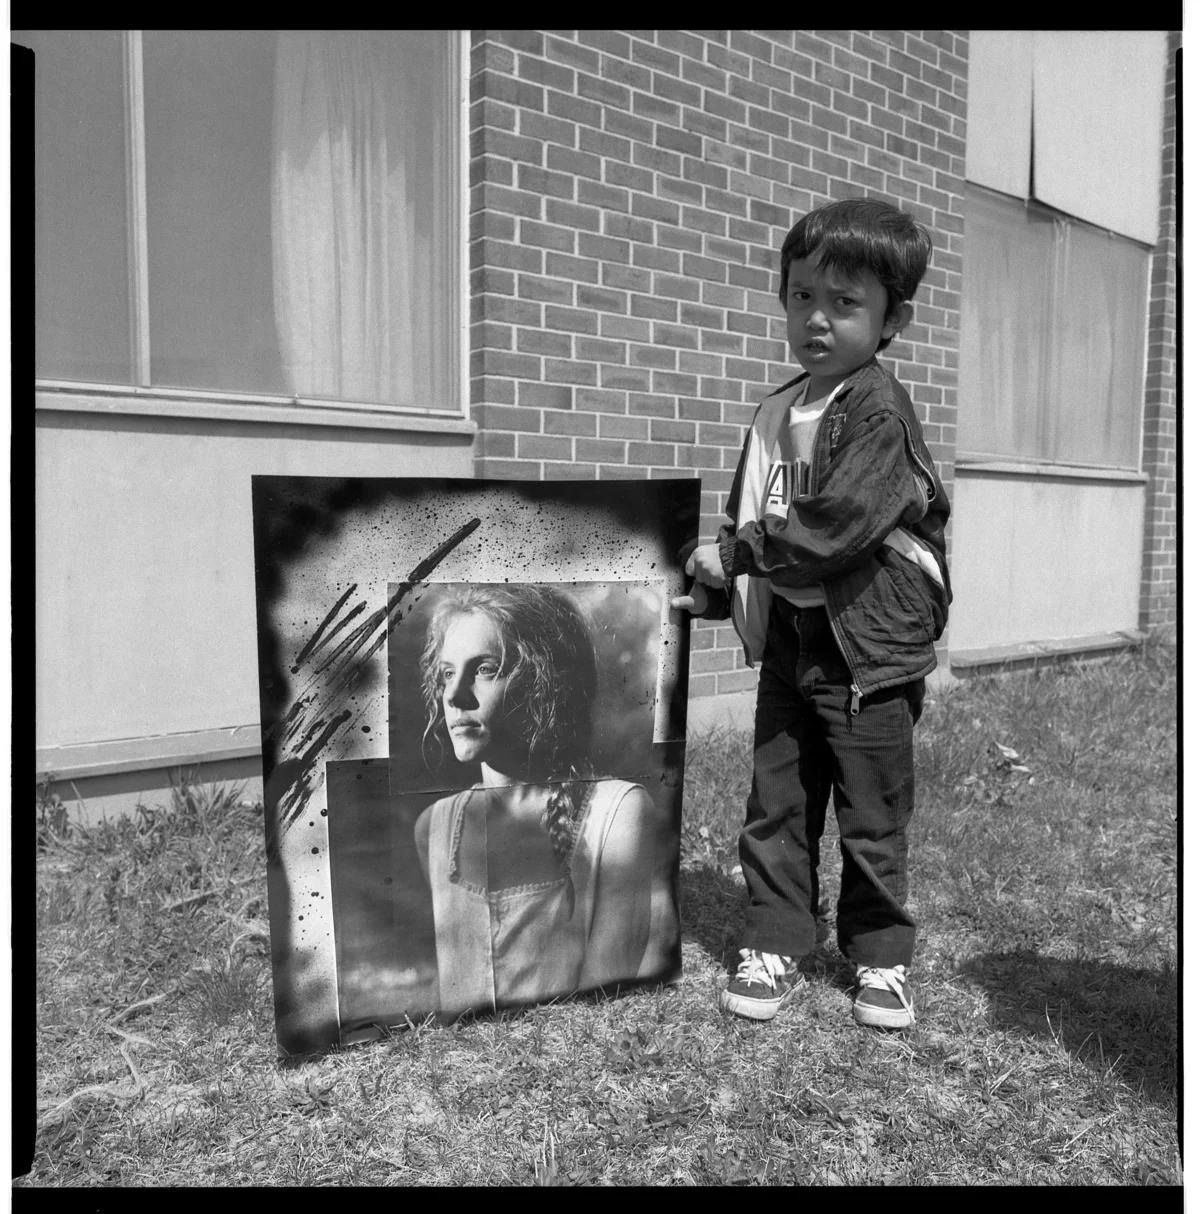 Boy Holding Photomontage I Did of Carol During My Light Work Artist's Residency, Syracuse, New York, 1989 by John Hodges